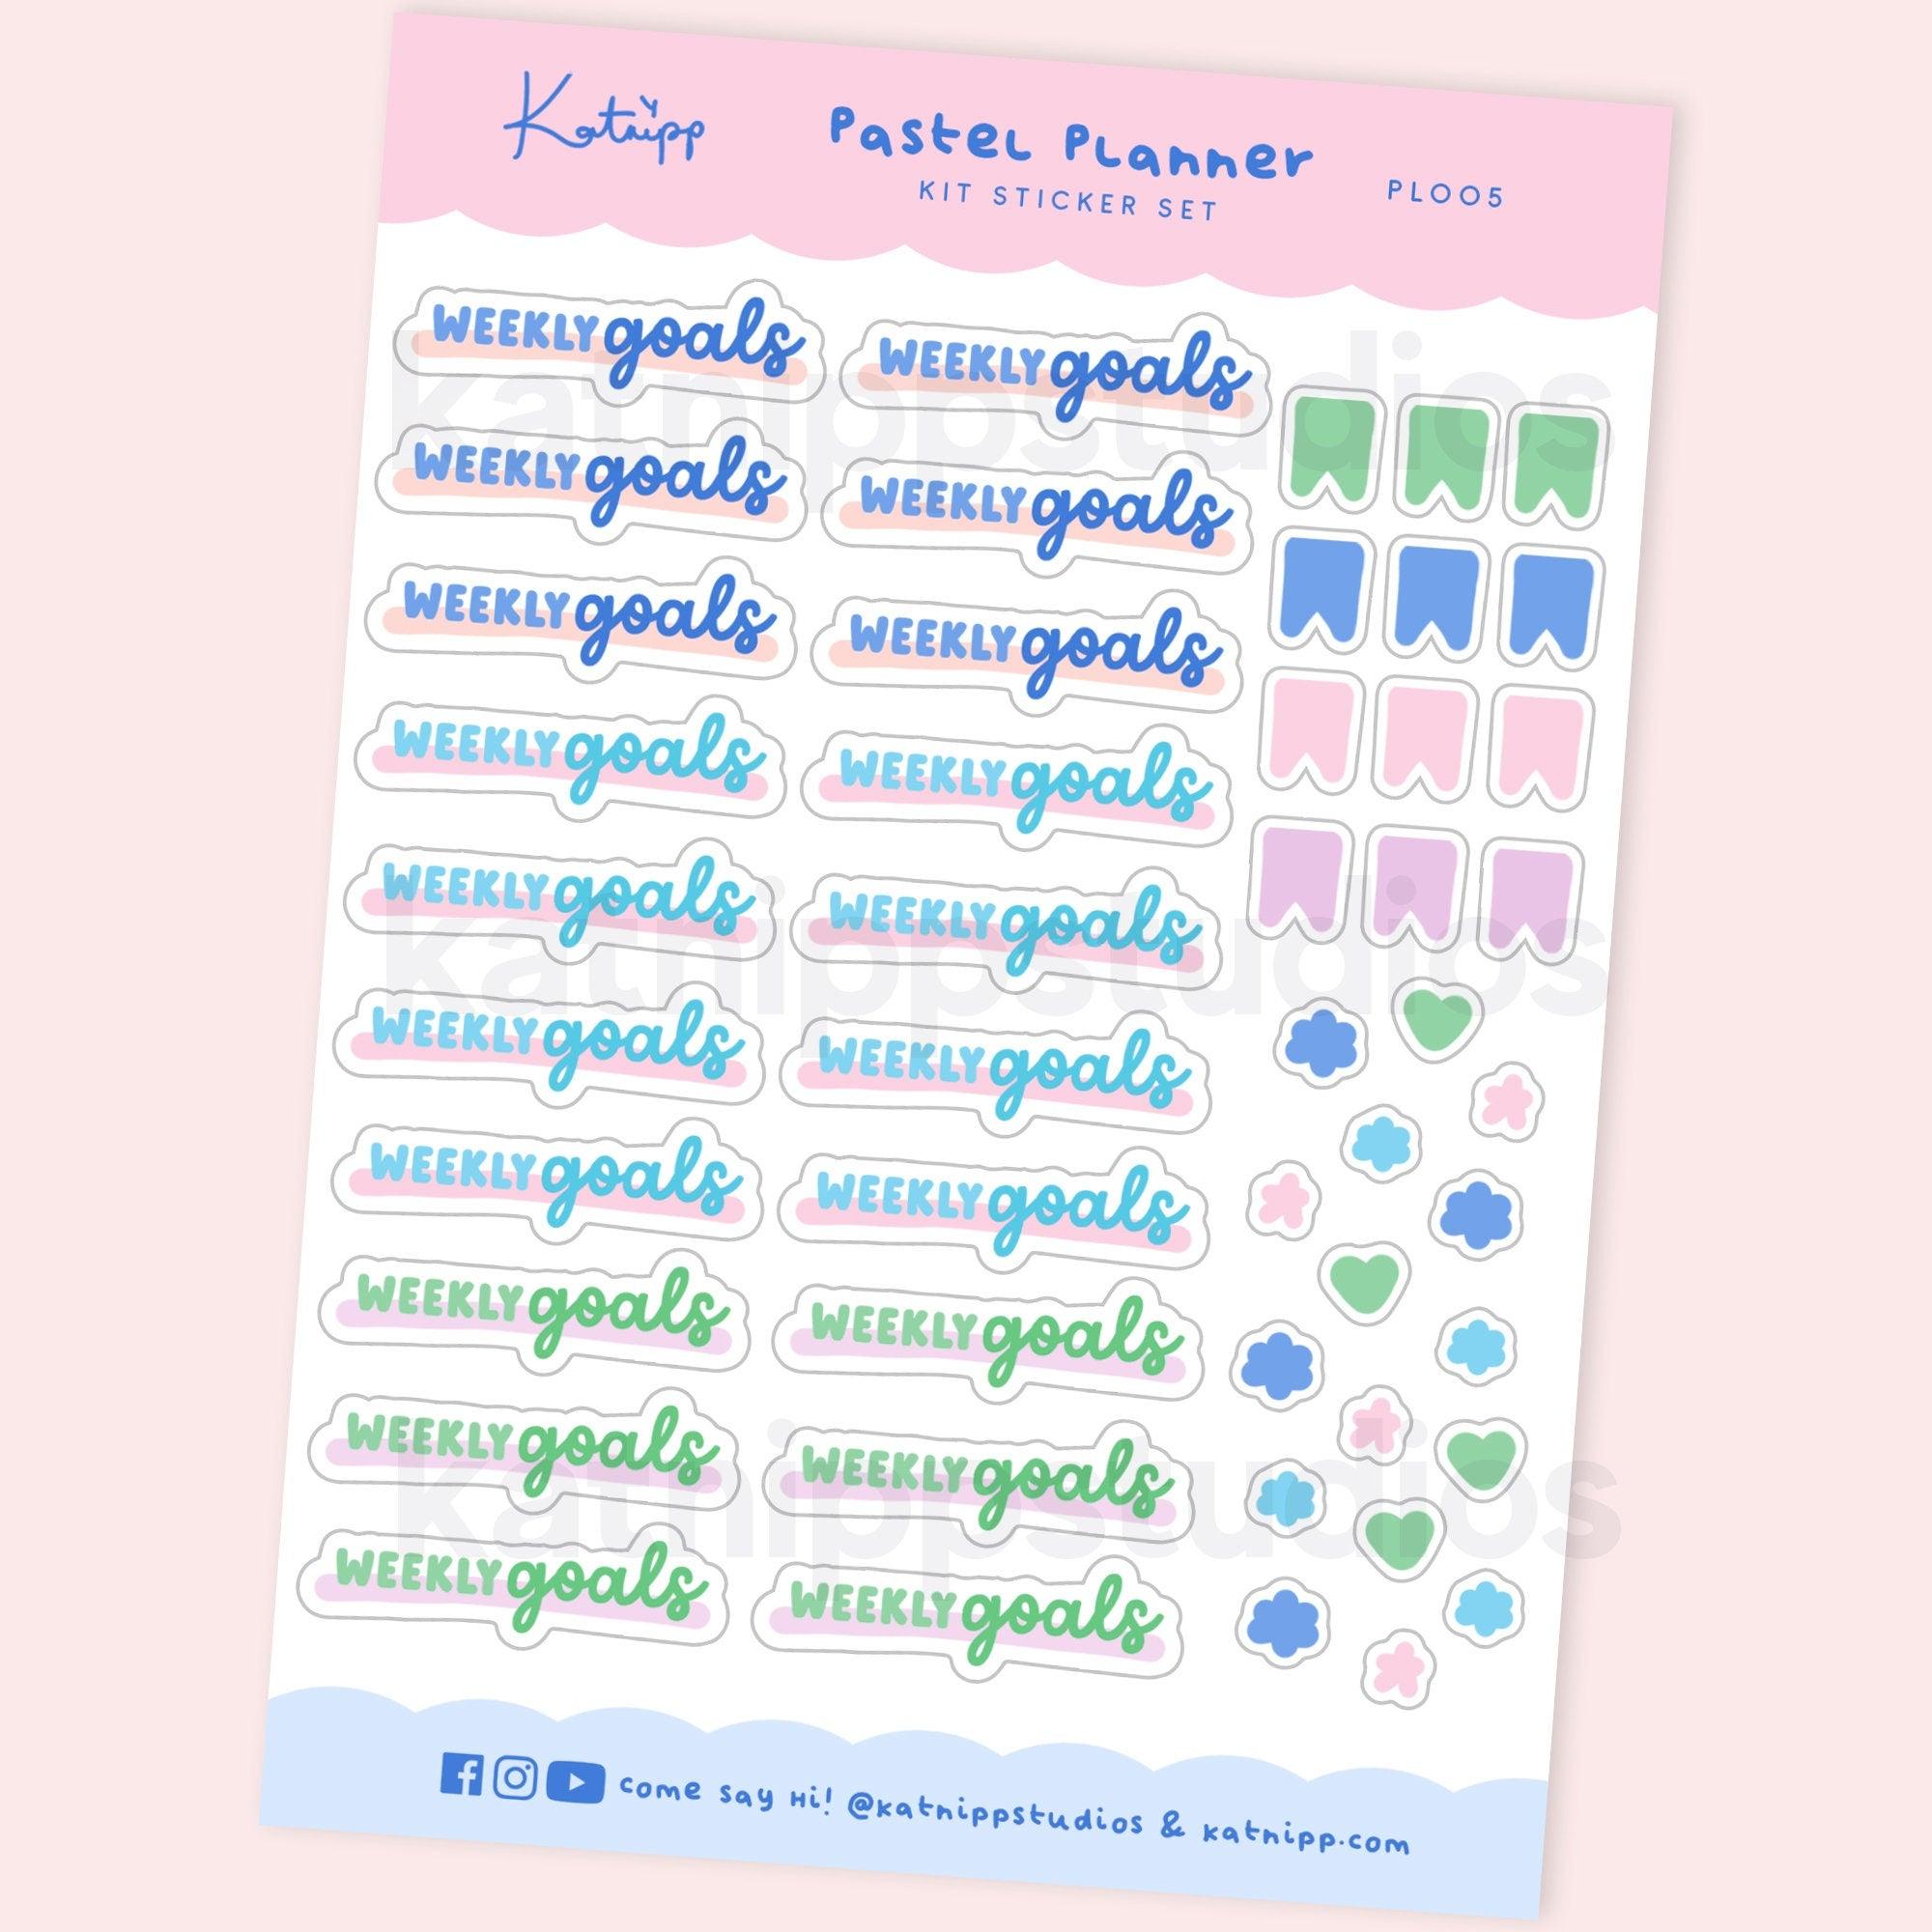 Weekly Goals Planner Kit Planner Sticker - PL005 - Katnipp Studios